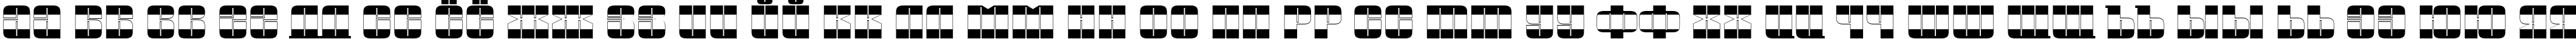 Пример написания русского алфавита шрифтом a_GlobusB&W